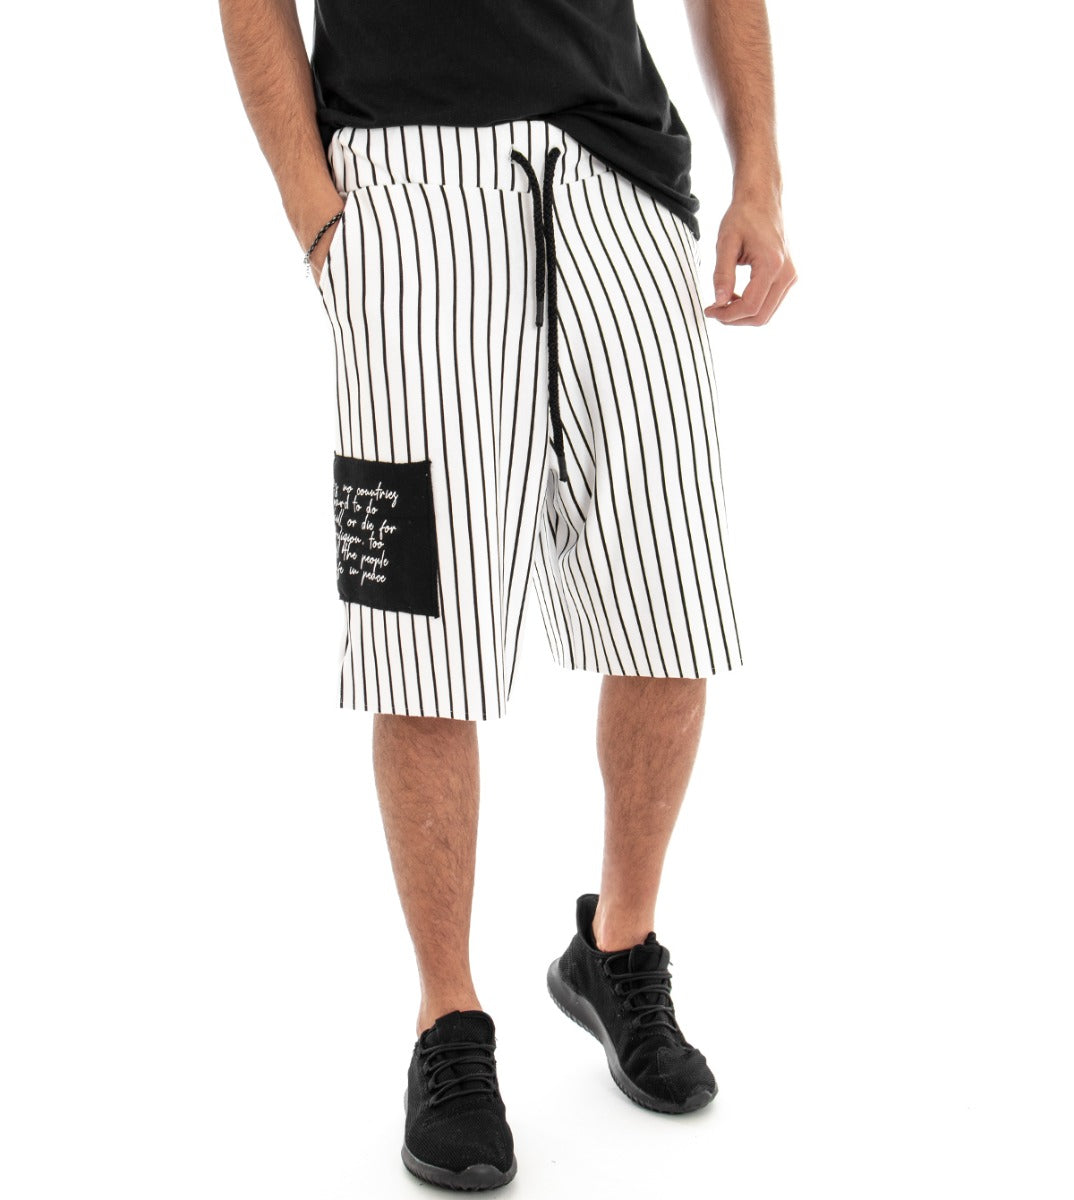 Bermuda Men's Tracksuit Shorts Striped Elastic Low Crotch Cotton GIOSAL-PC1369A